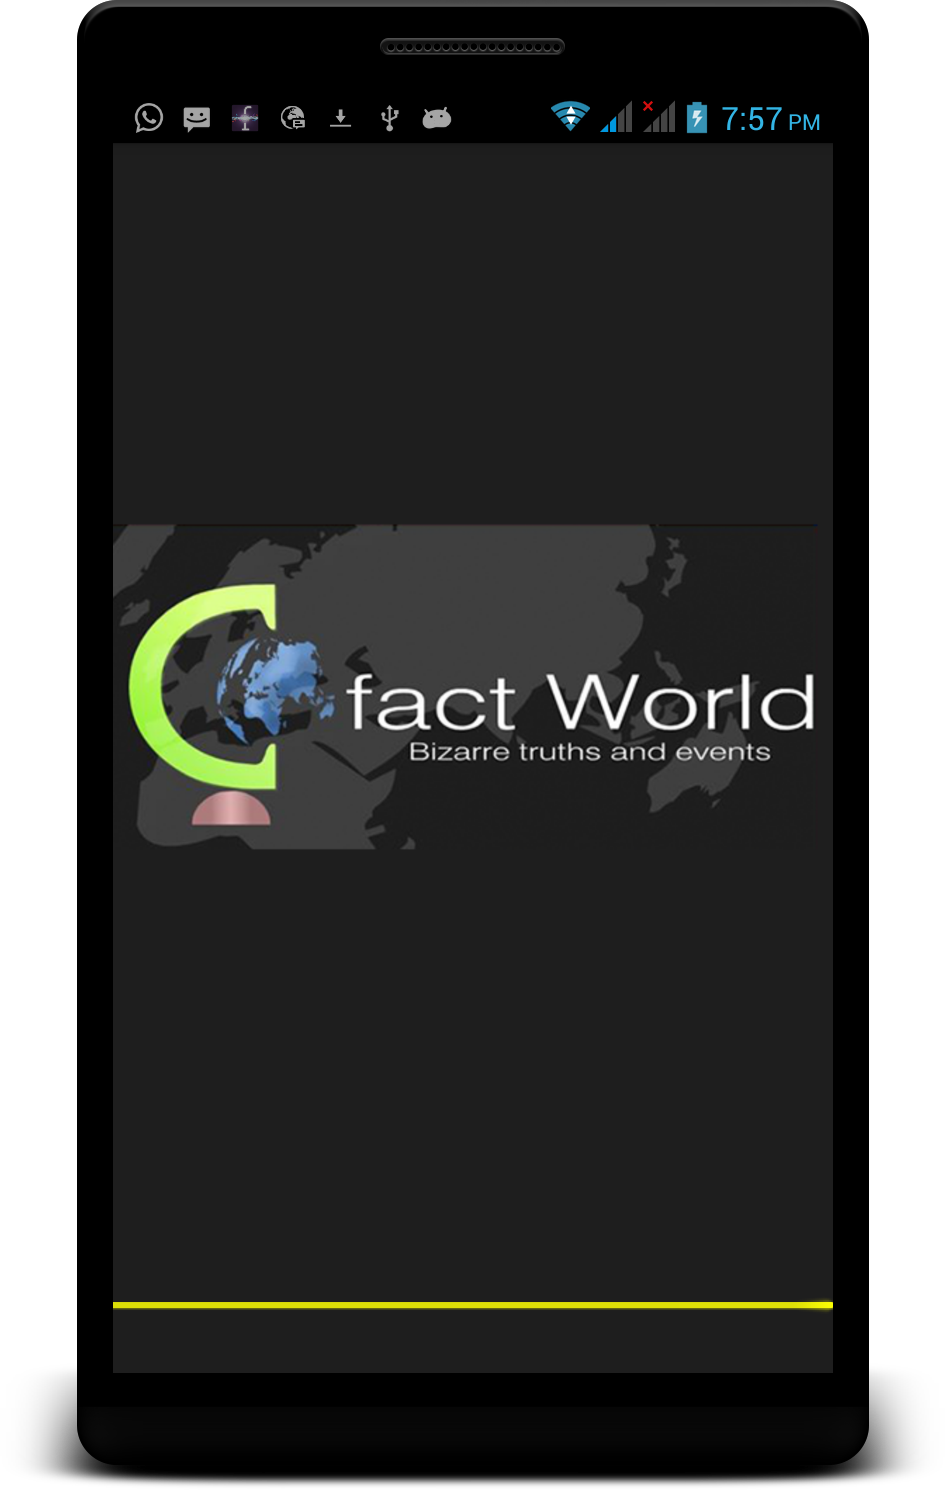 CfactWorld - Best Facts App